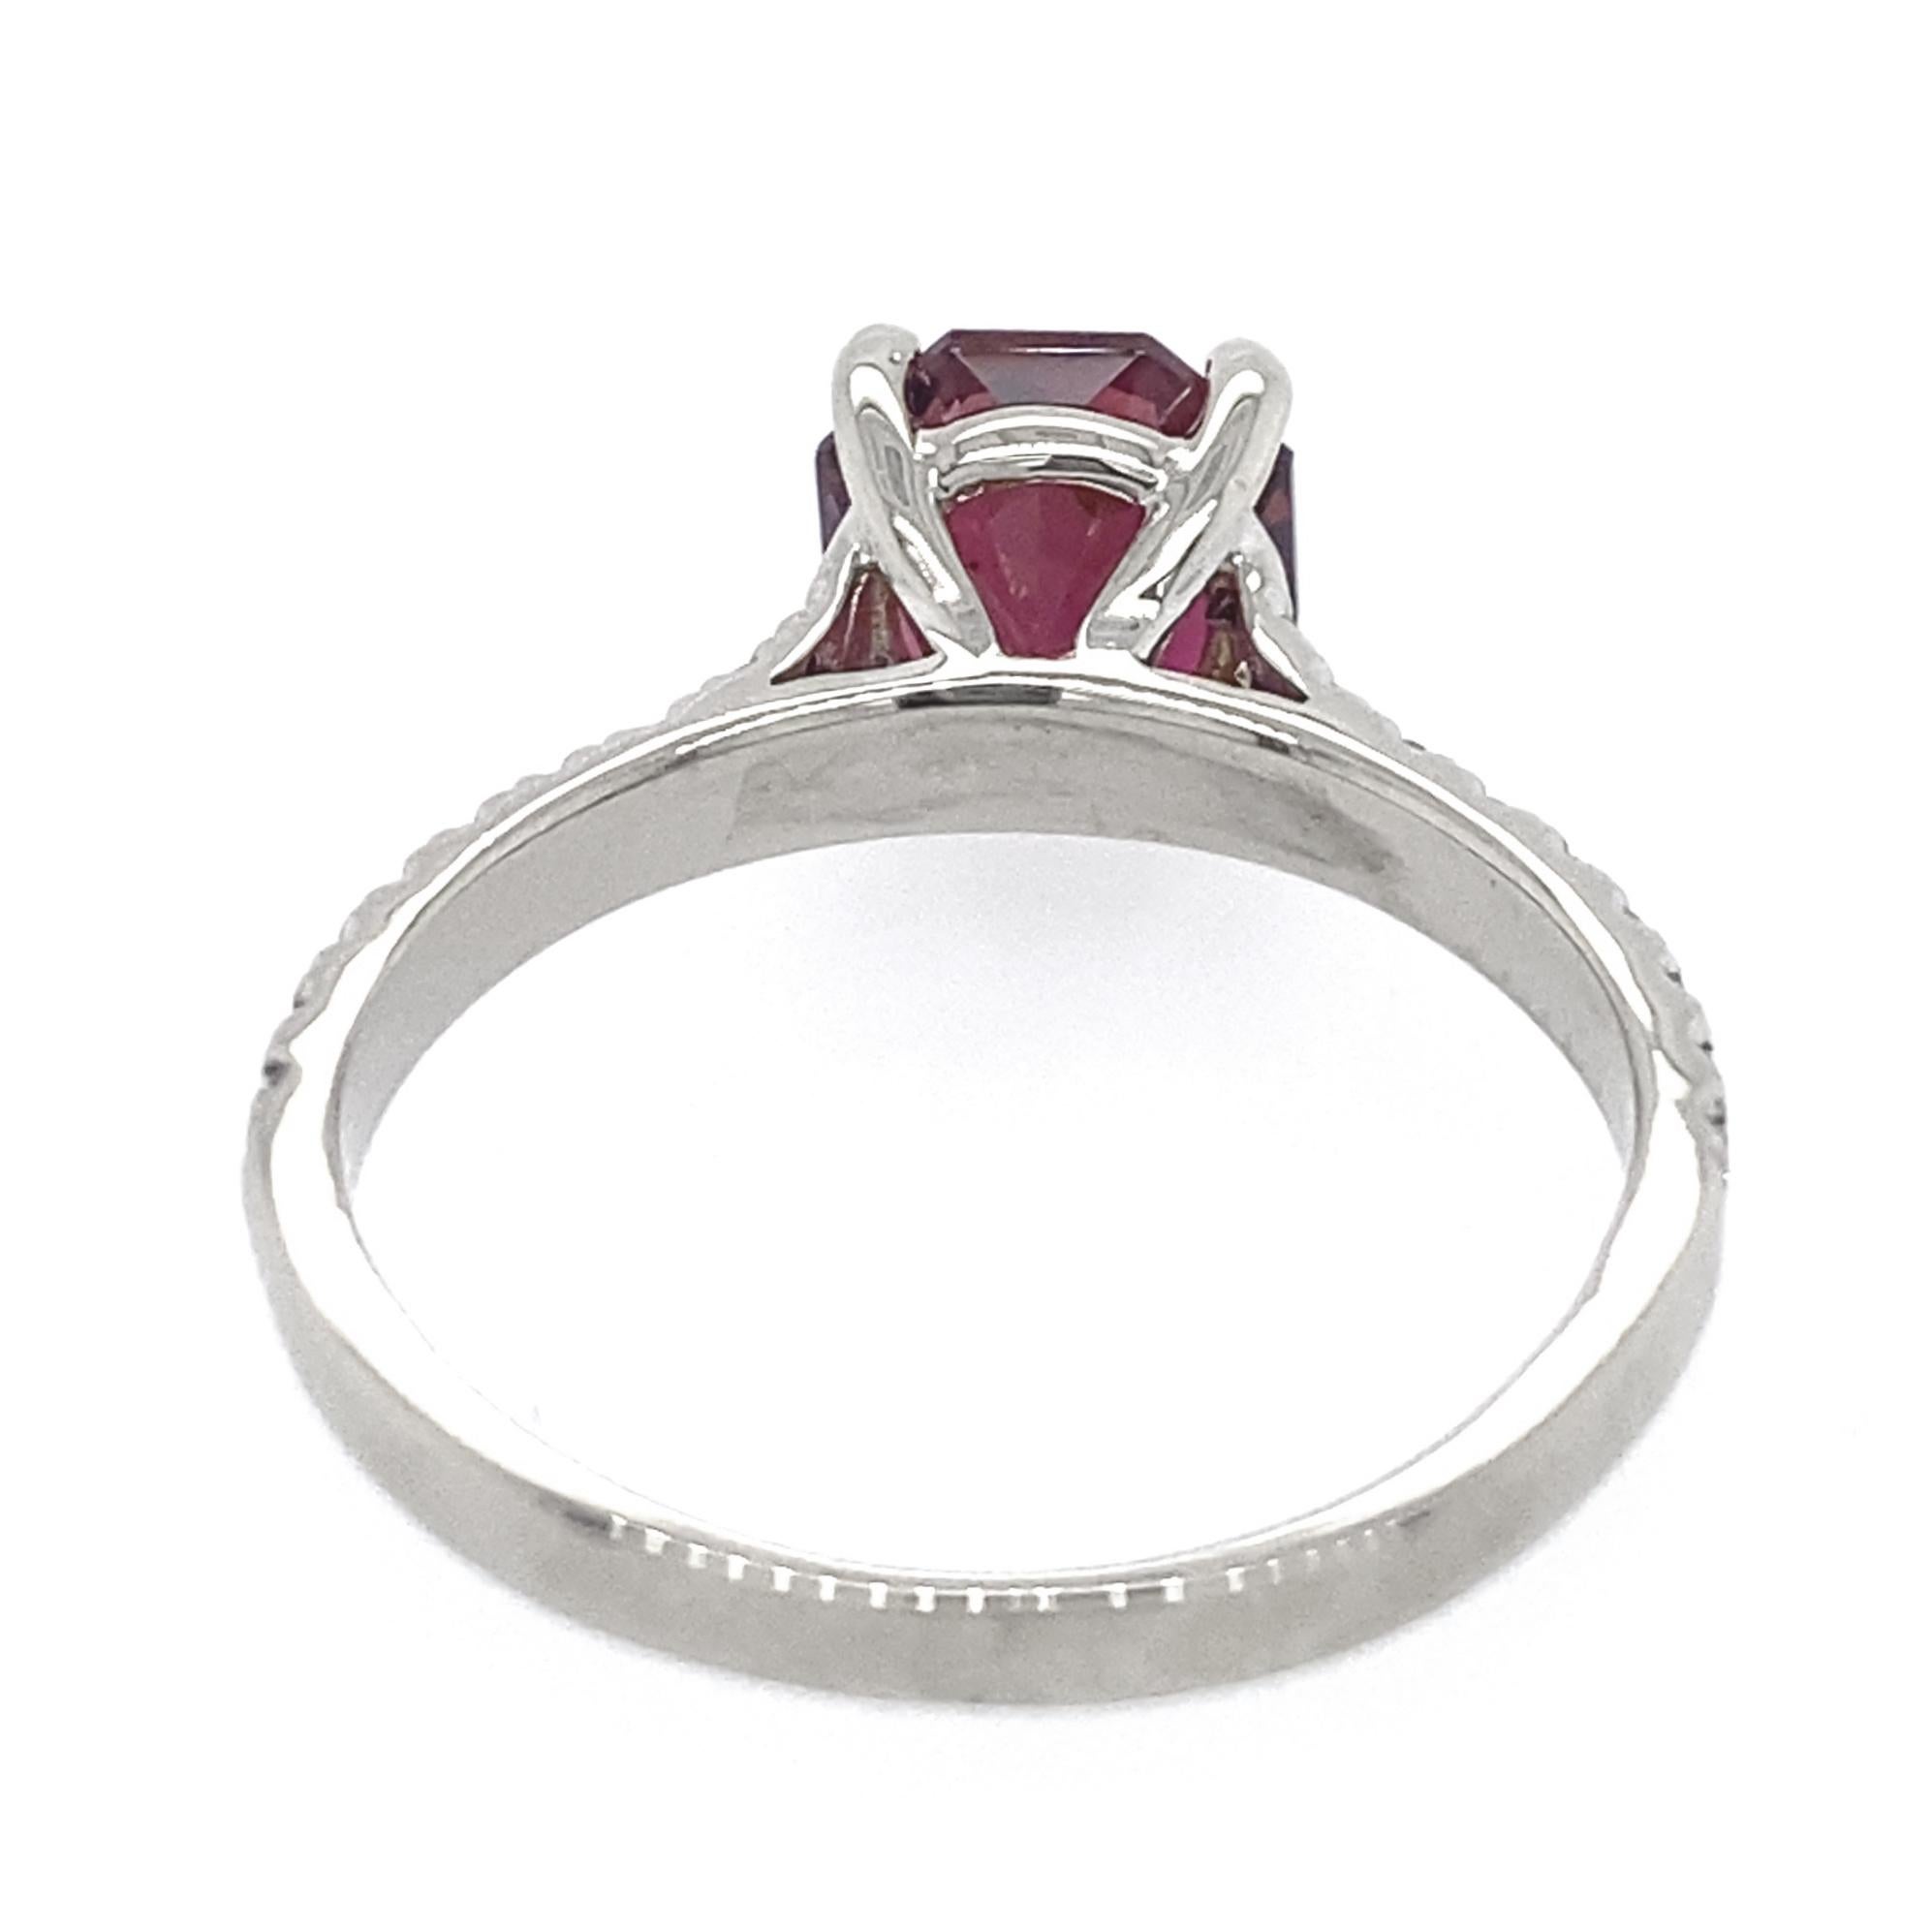 1.7 Carat Dark Pink Tourmaline Octagon in White Gold Ring with Diamond Band 7